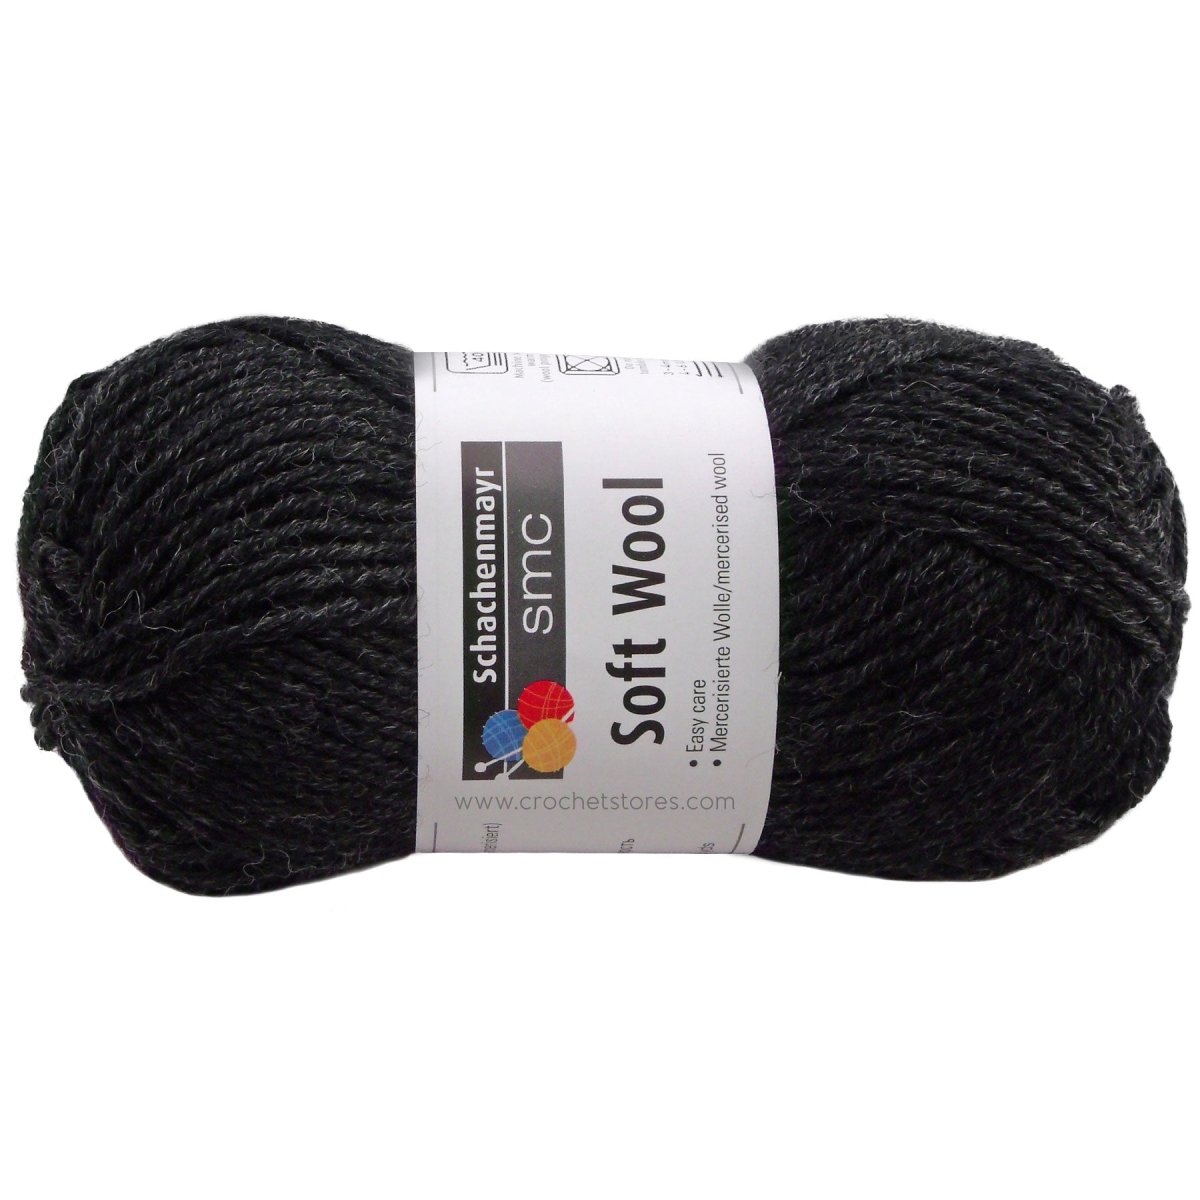 SOFT WOOL - Crochetstores9807536-984082700938445